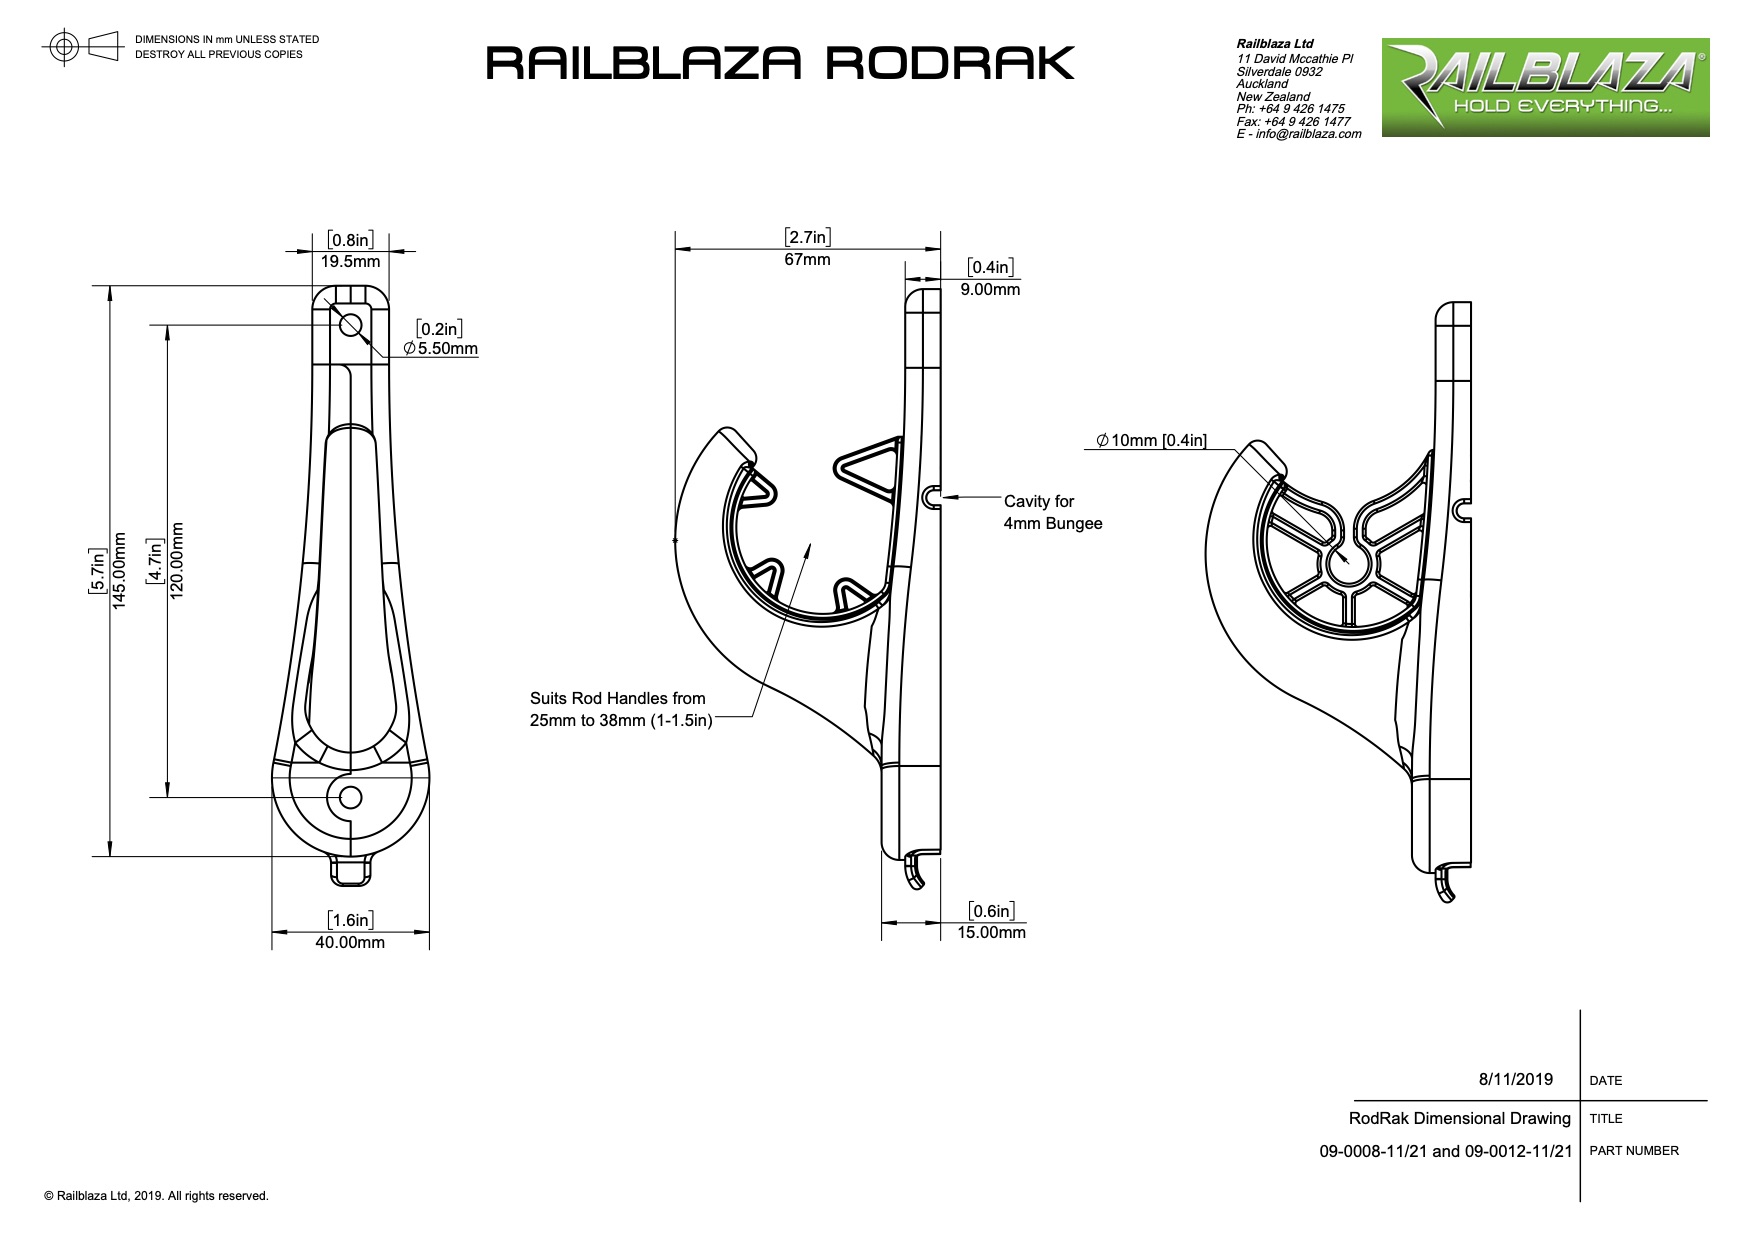 RodRak-Pole-Holder-RodRak-Fishing-Rod-Storage-Rack-RAILBLAZA-RodRak-Dimensioned-Drawing-2190_205150.jpg